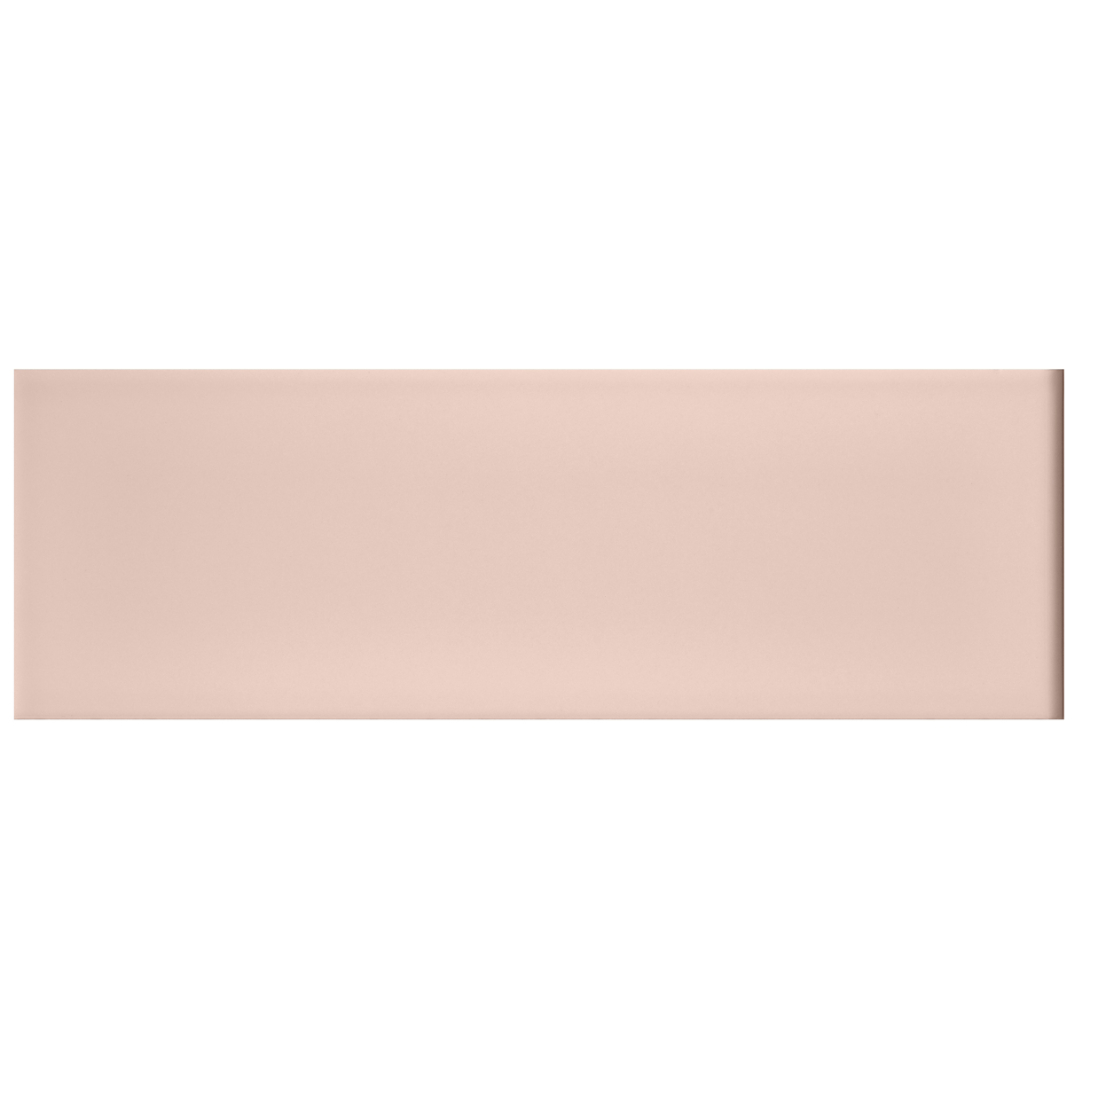 Imperial Pink Gls (072) RES 10x30cm